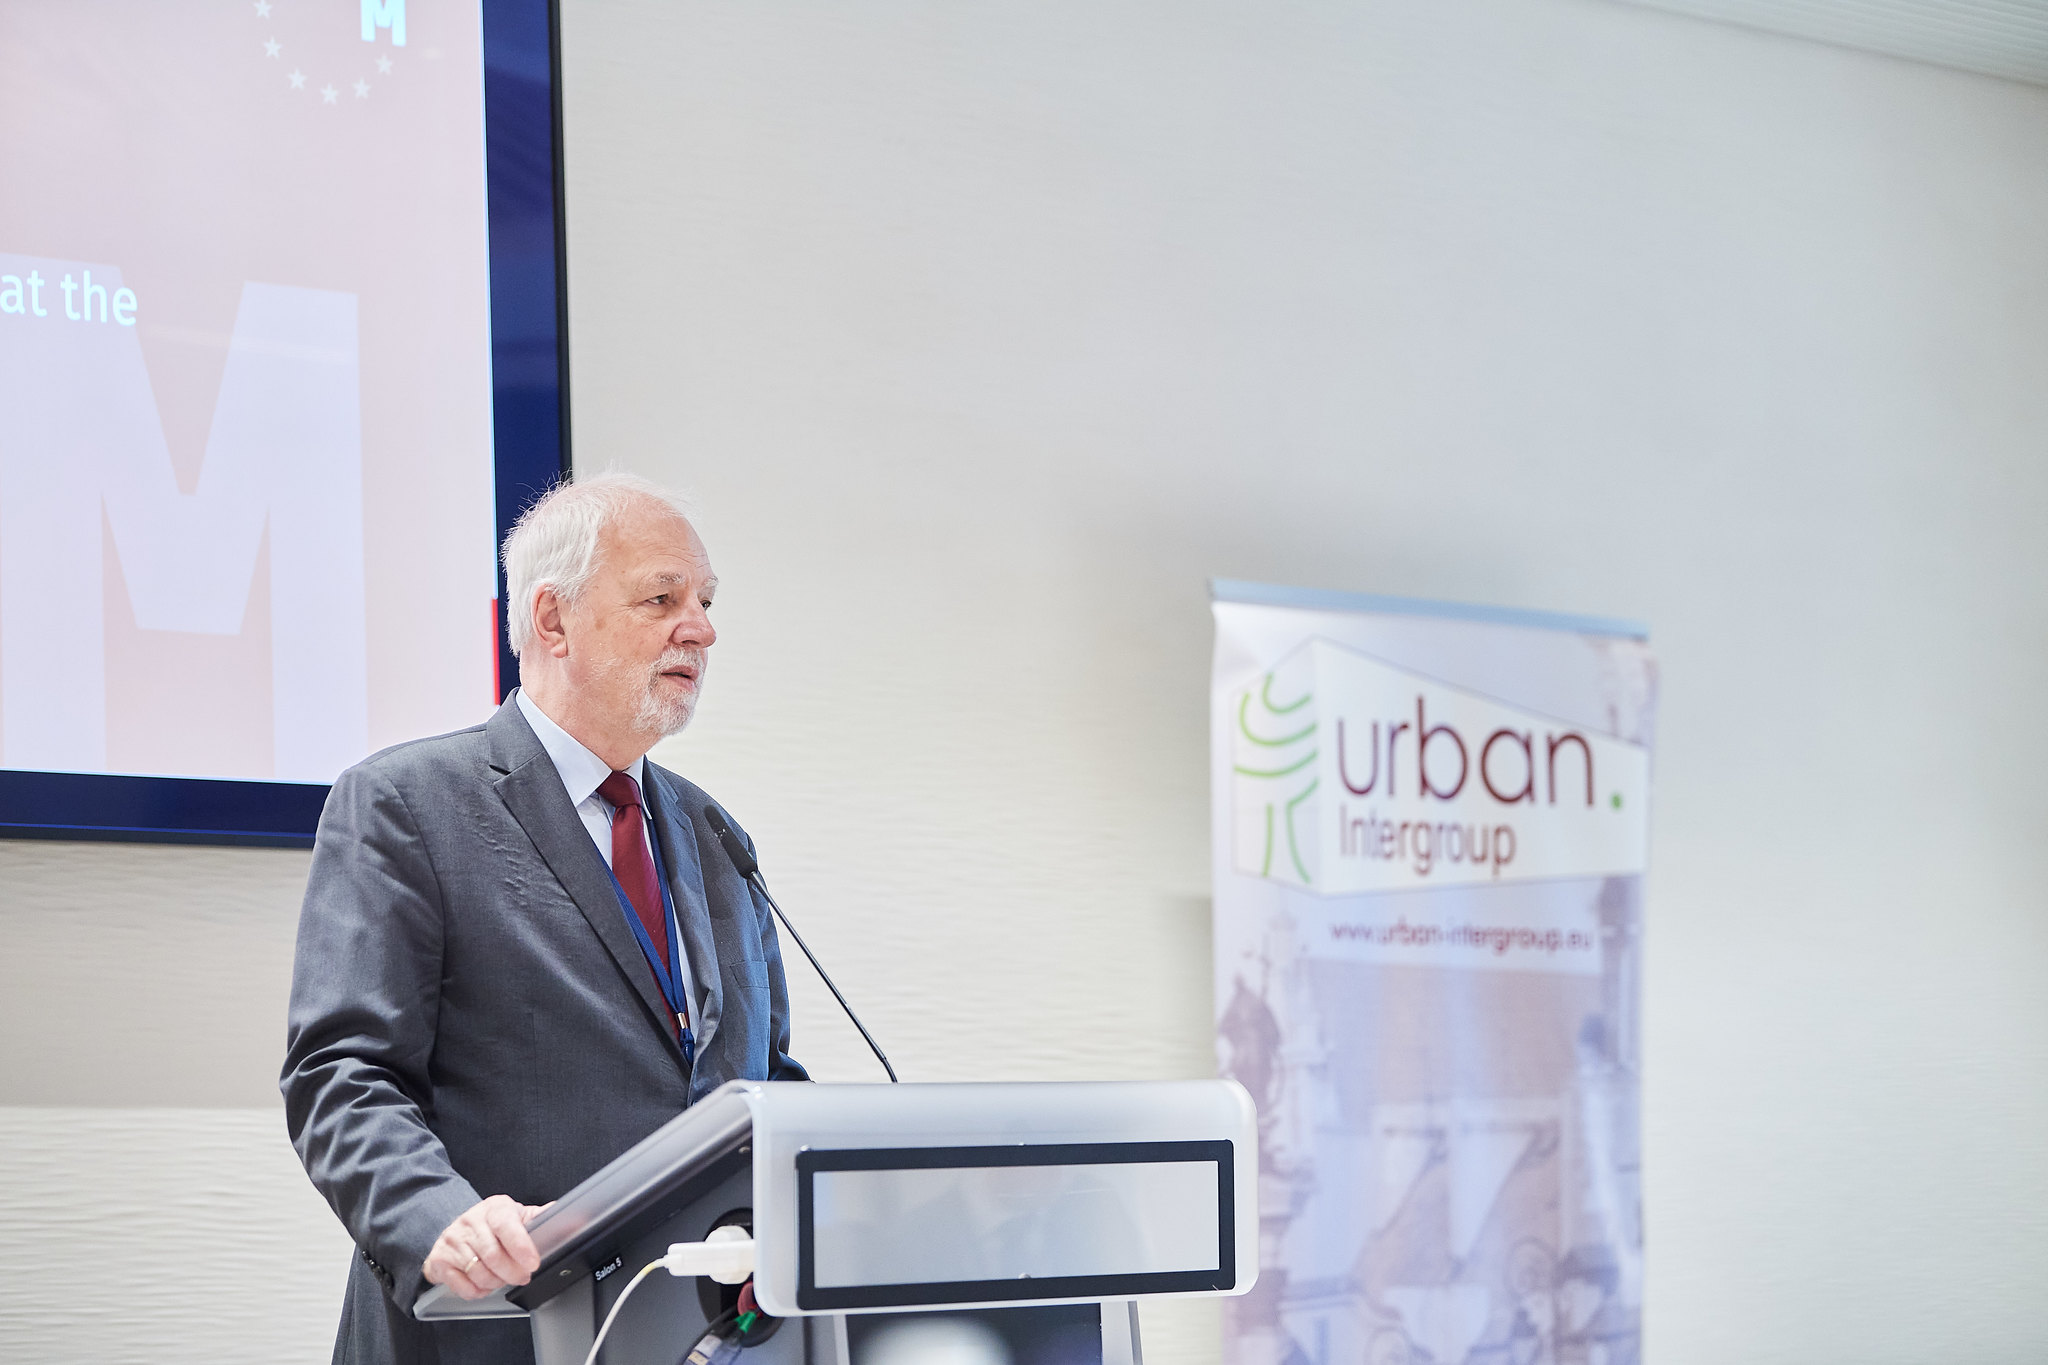 Jan Olbrycht MEP, President of the Urban Intergroup